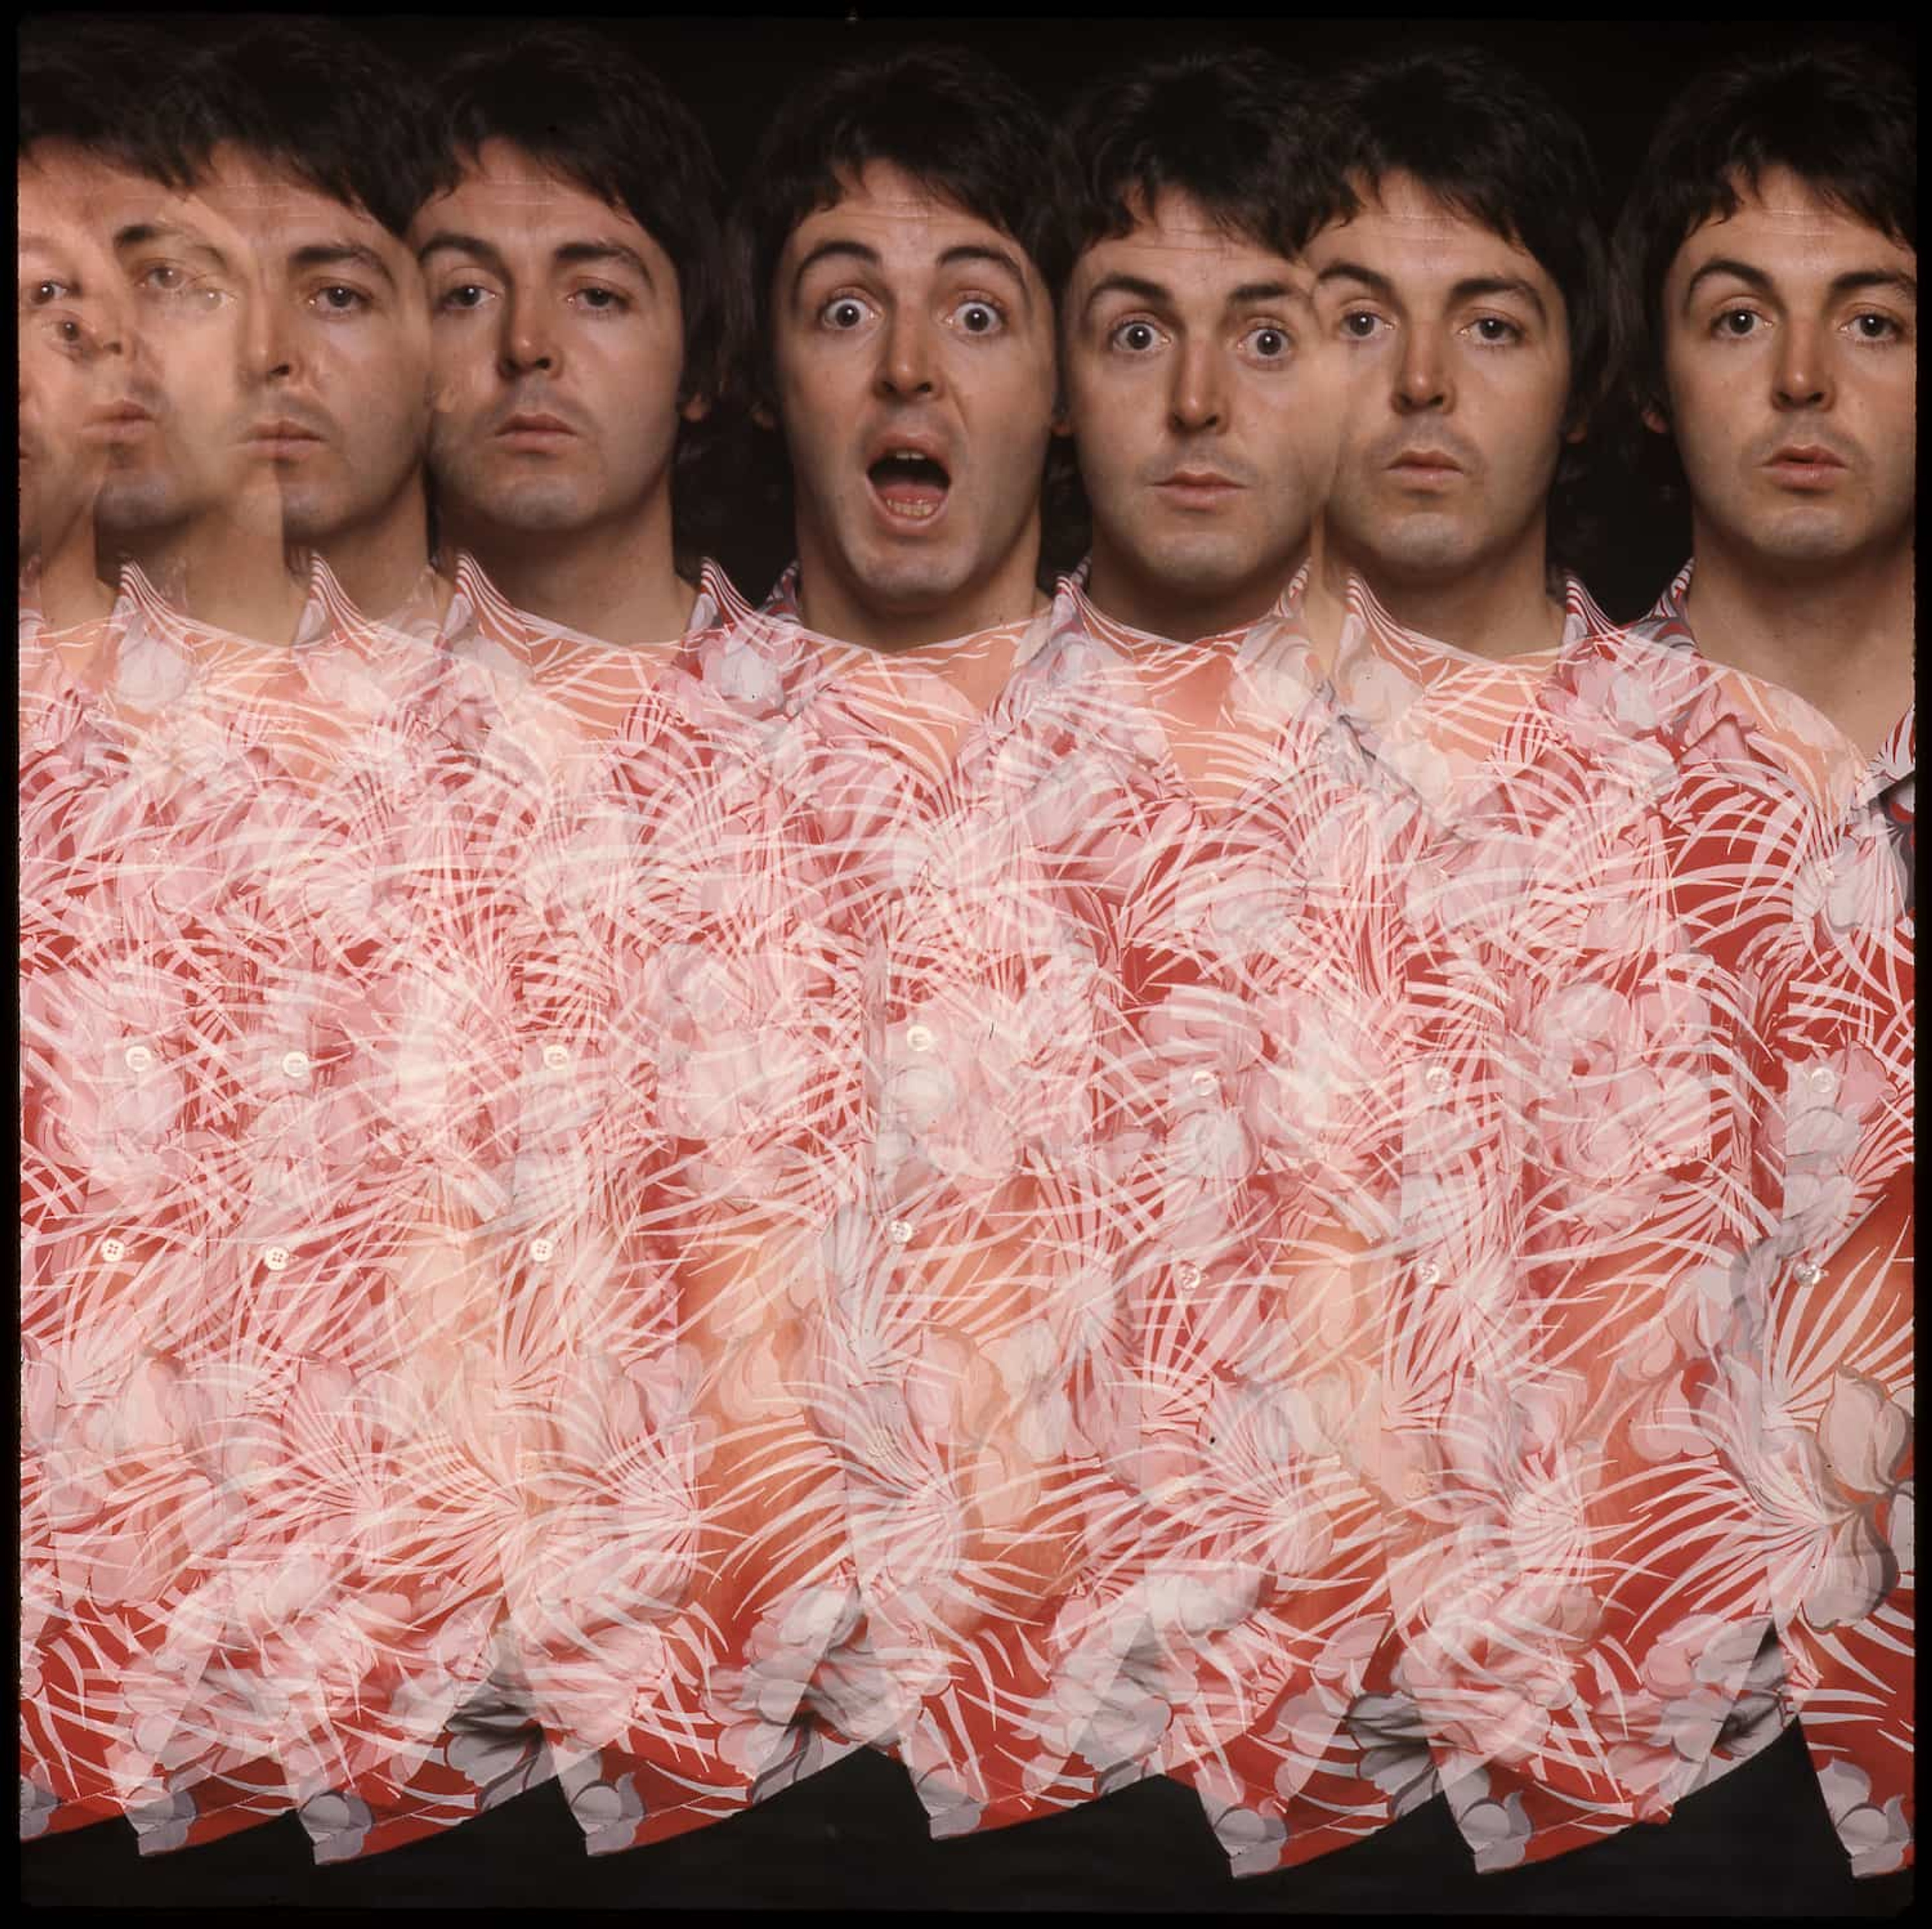 Multi-exposure photograph of Paul